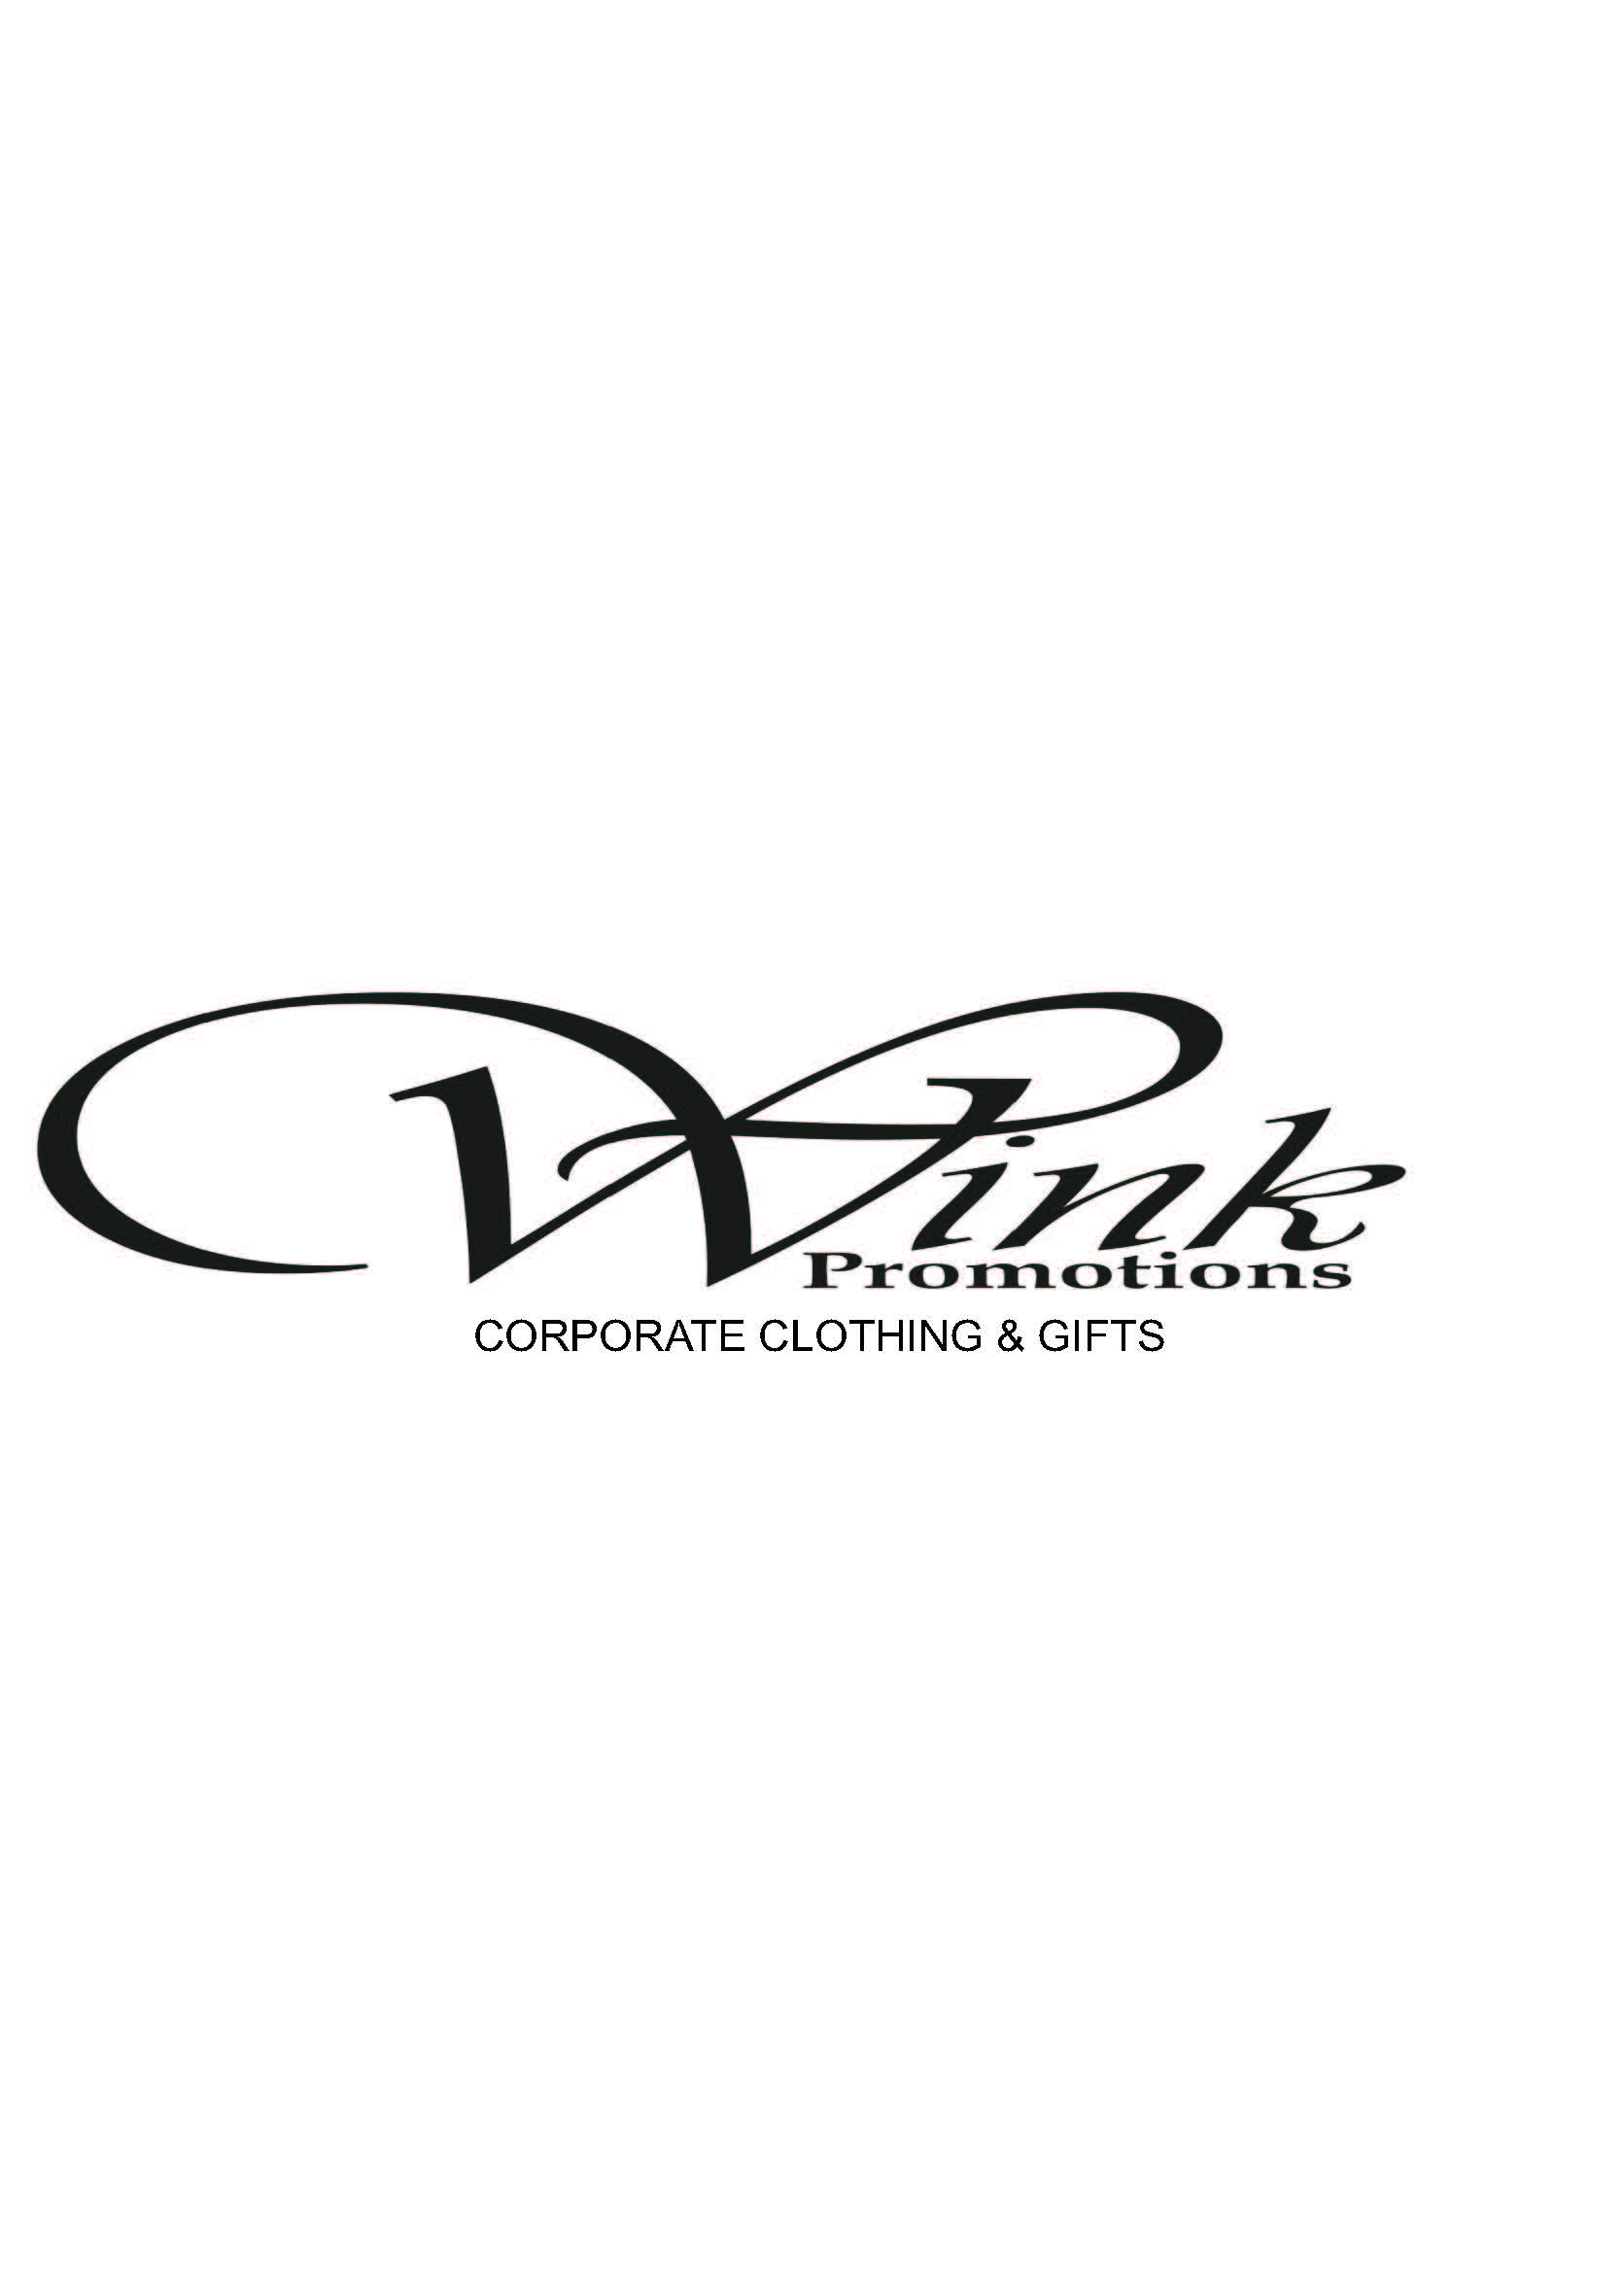 Wink Promotions Cc logo